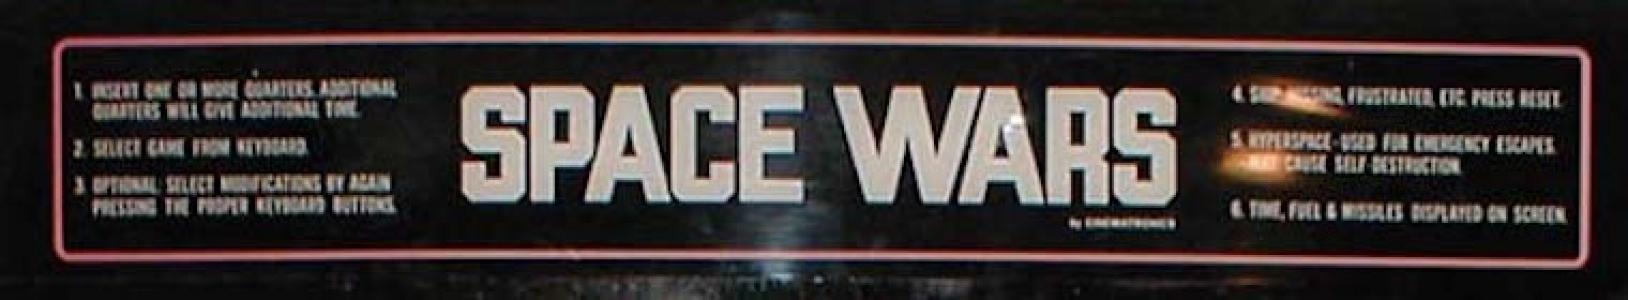 Space Wars banner